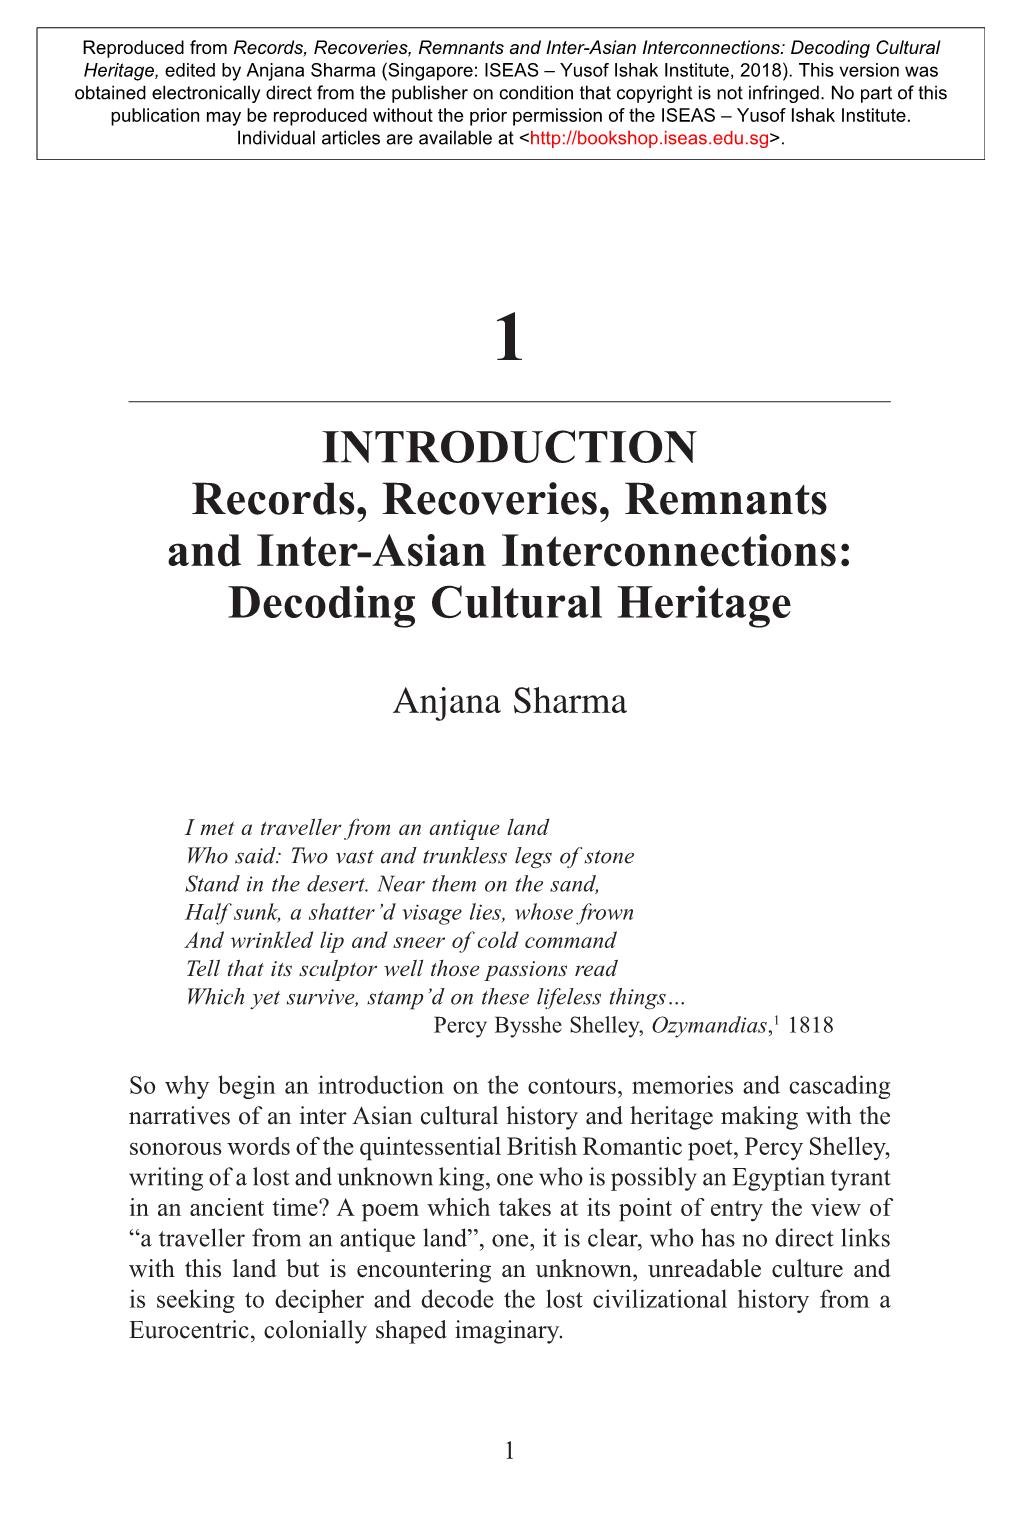 Decoding Cultural Heritage